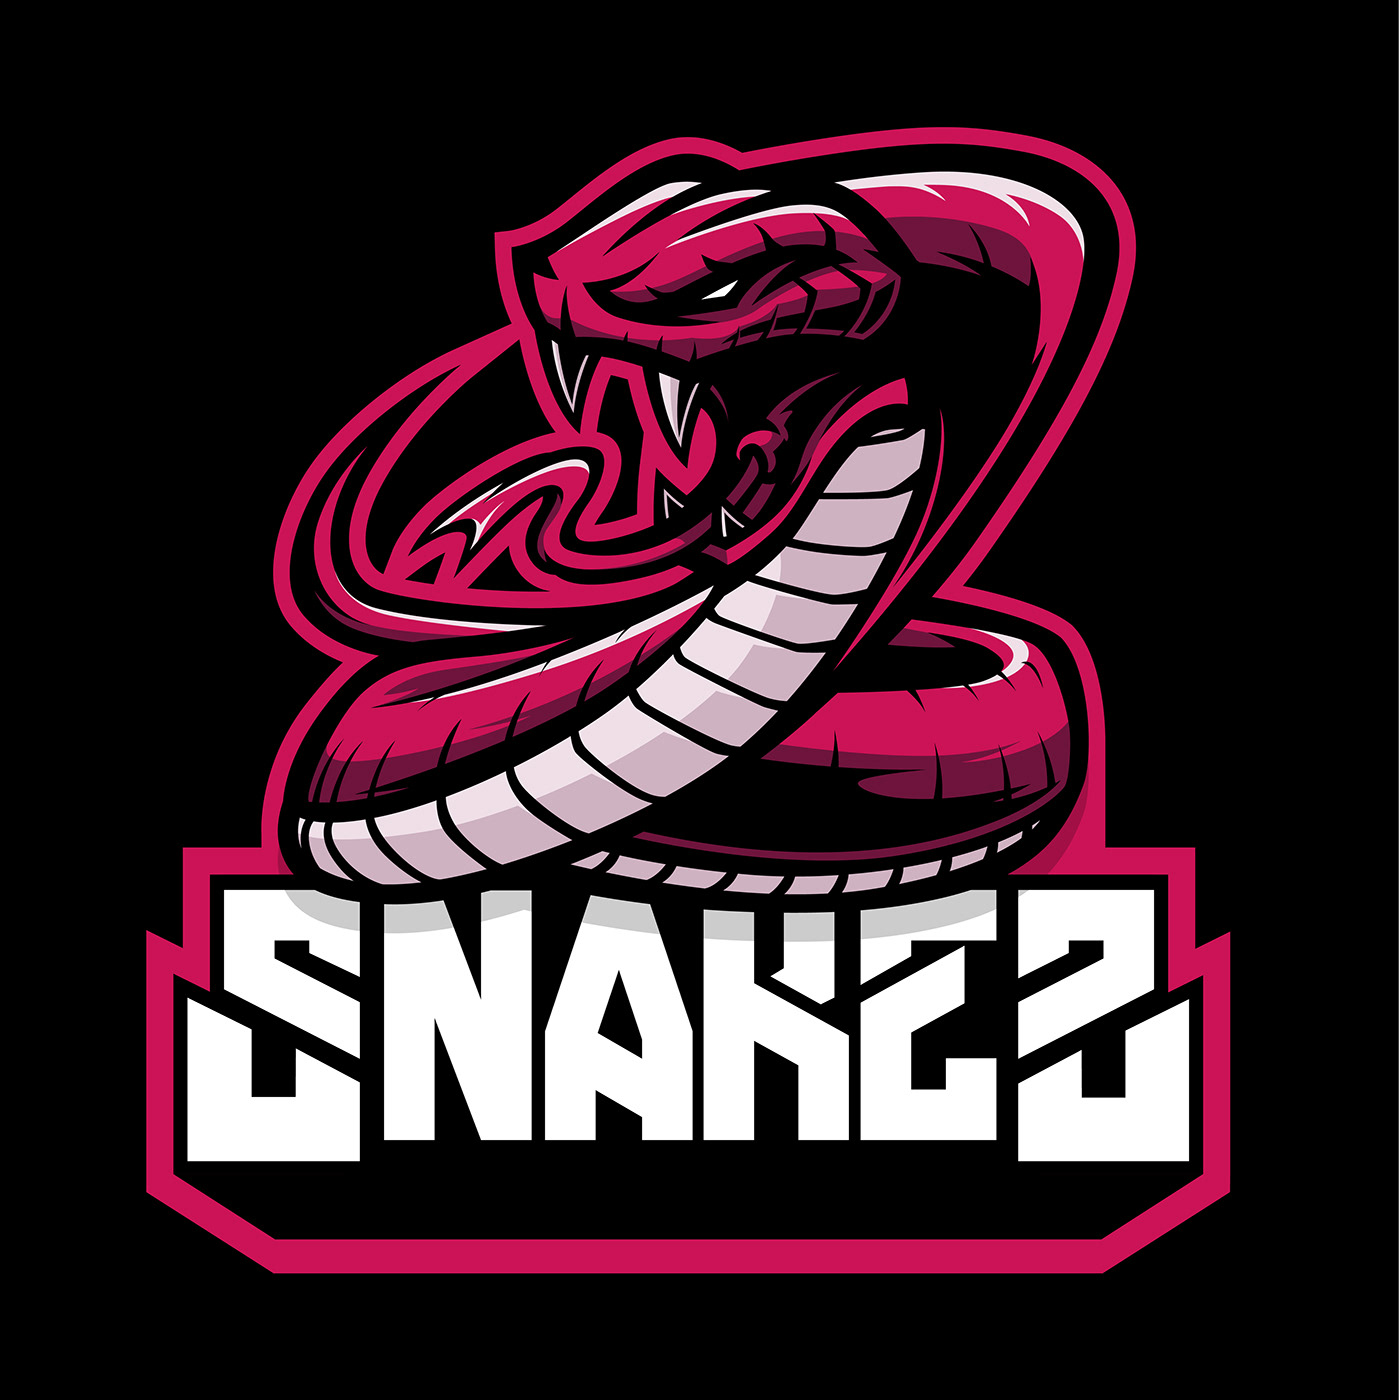 Snakes Logo on Behance
 Sea Serpent Logo